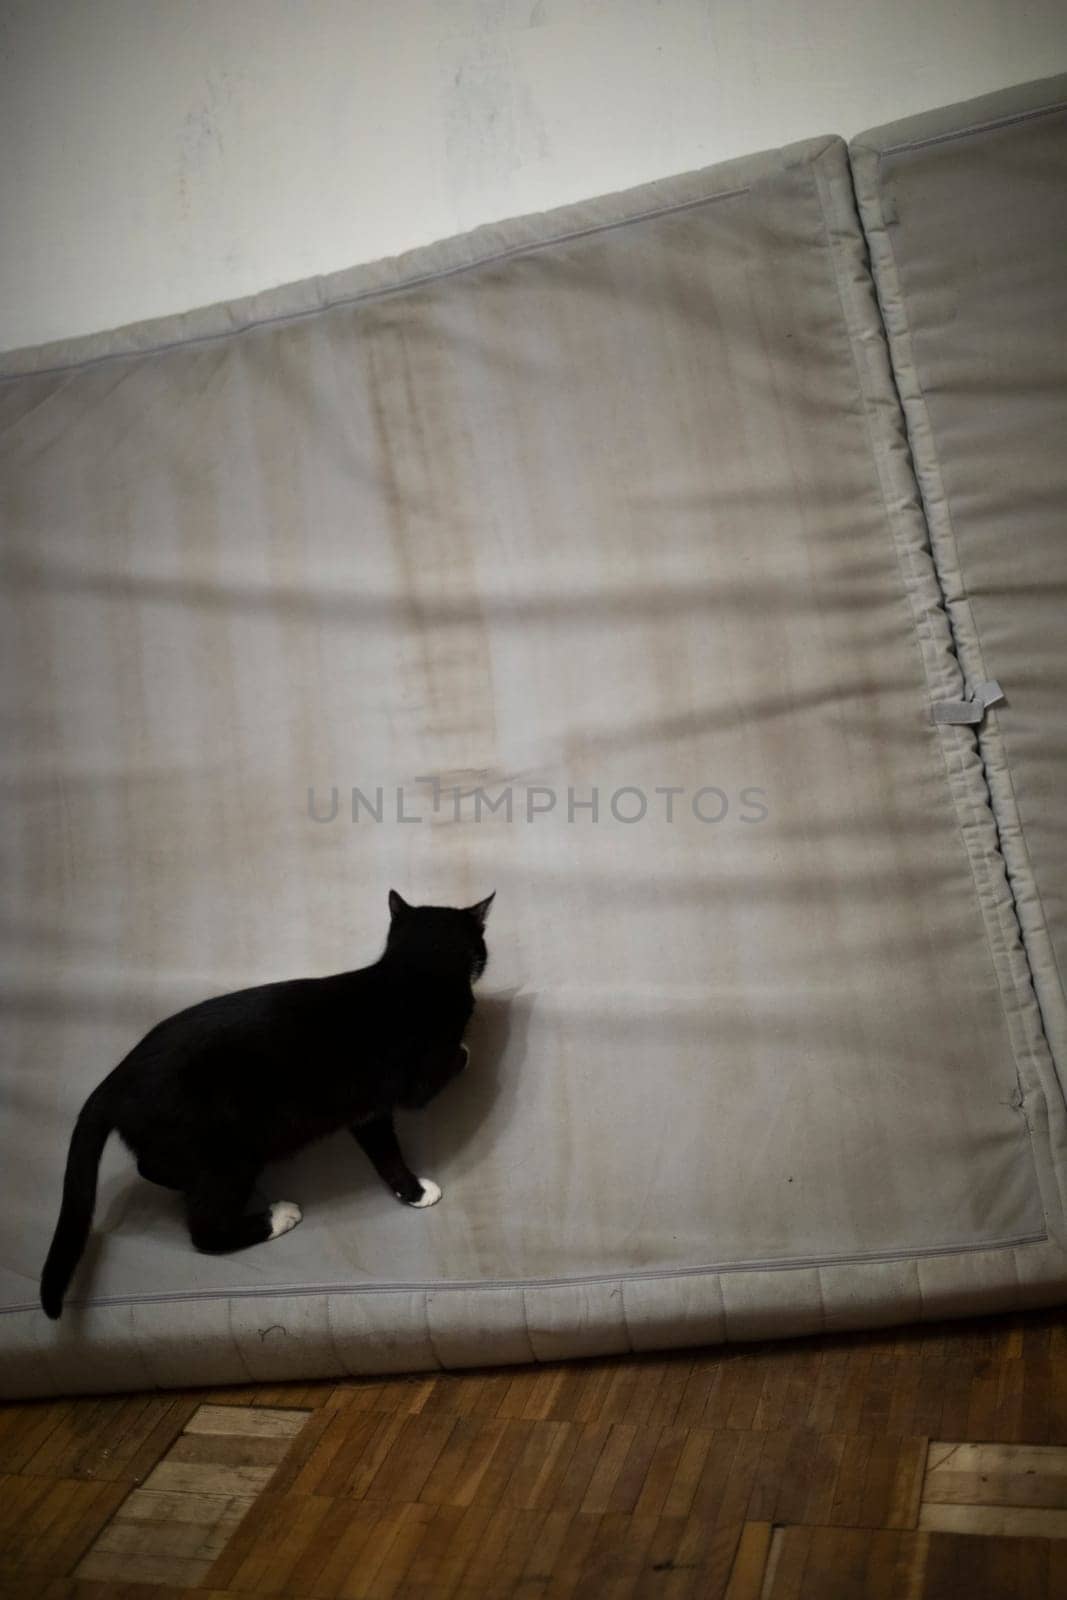 Cat is full on mattress. Animal wants to ruin mattress. by OlegKopyov